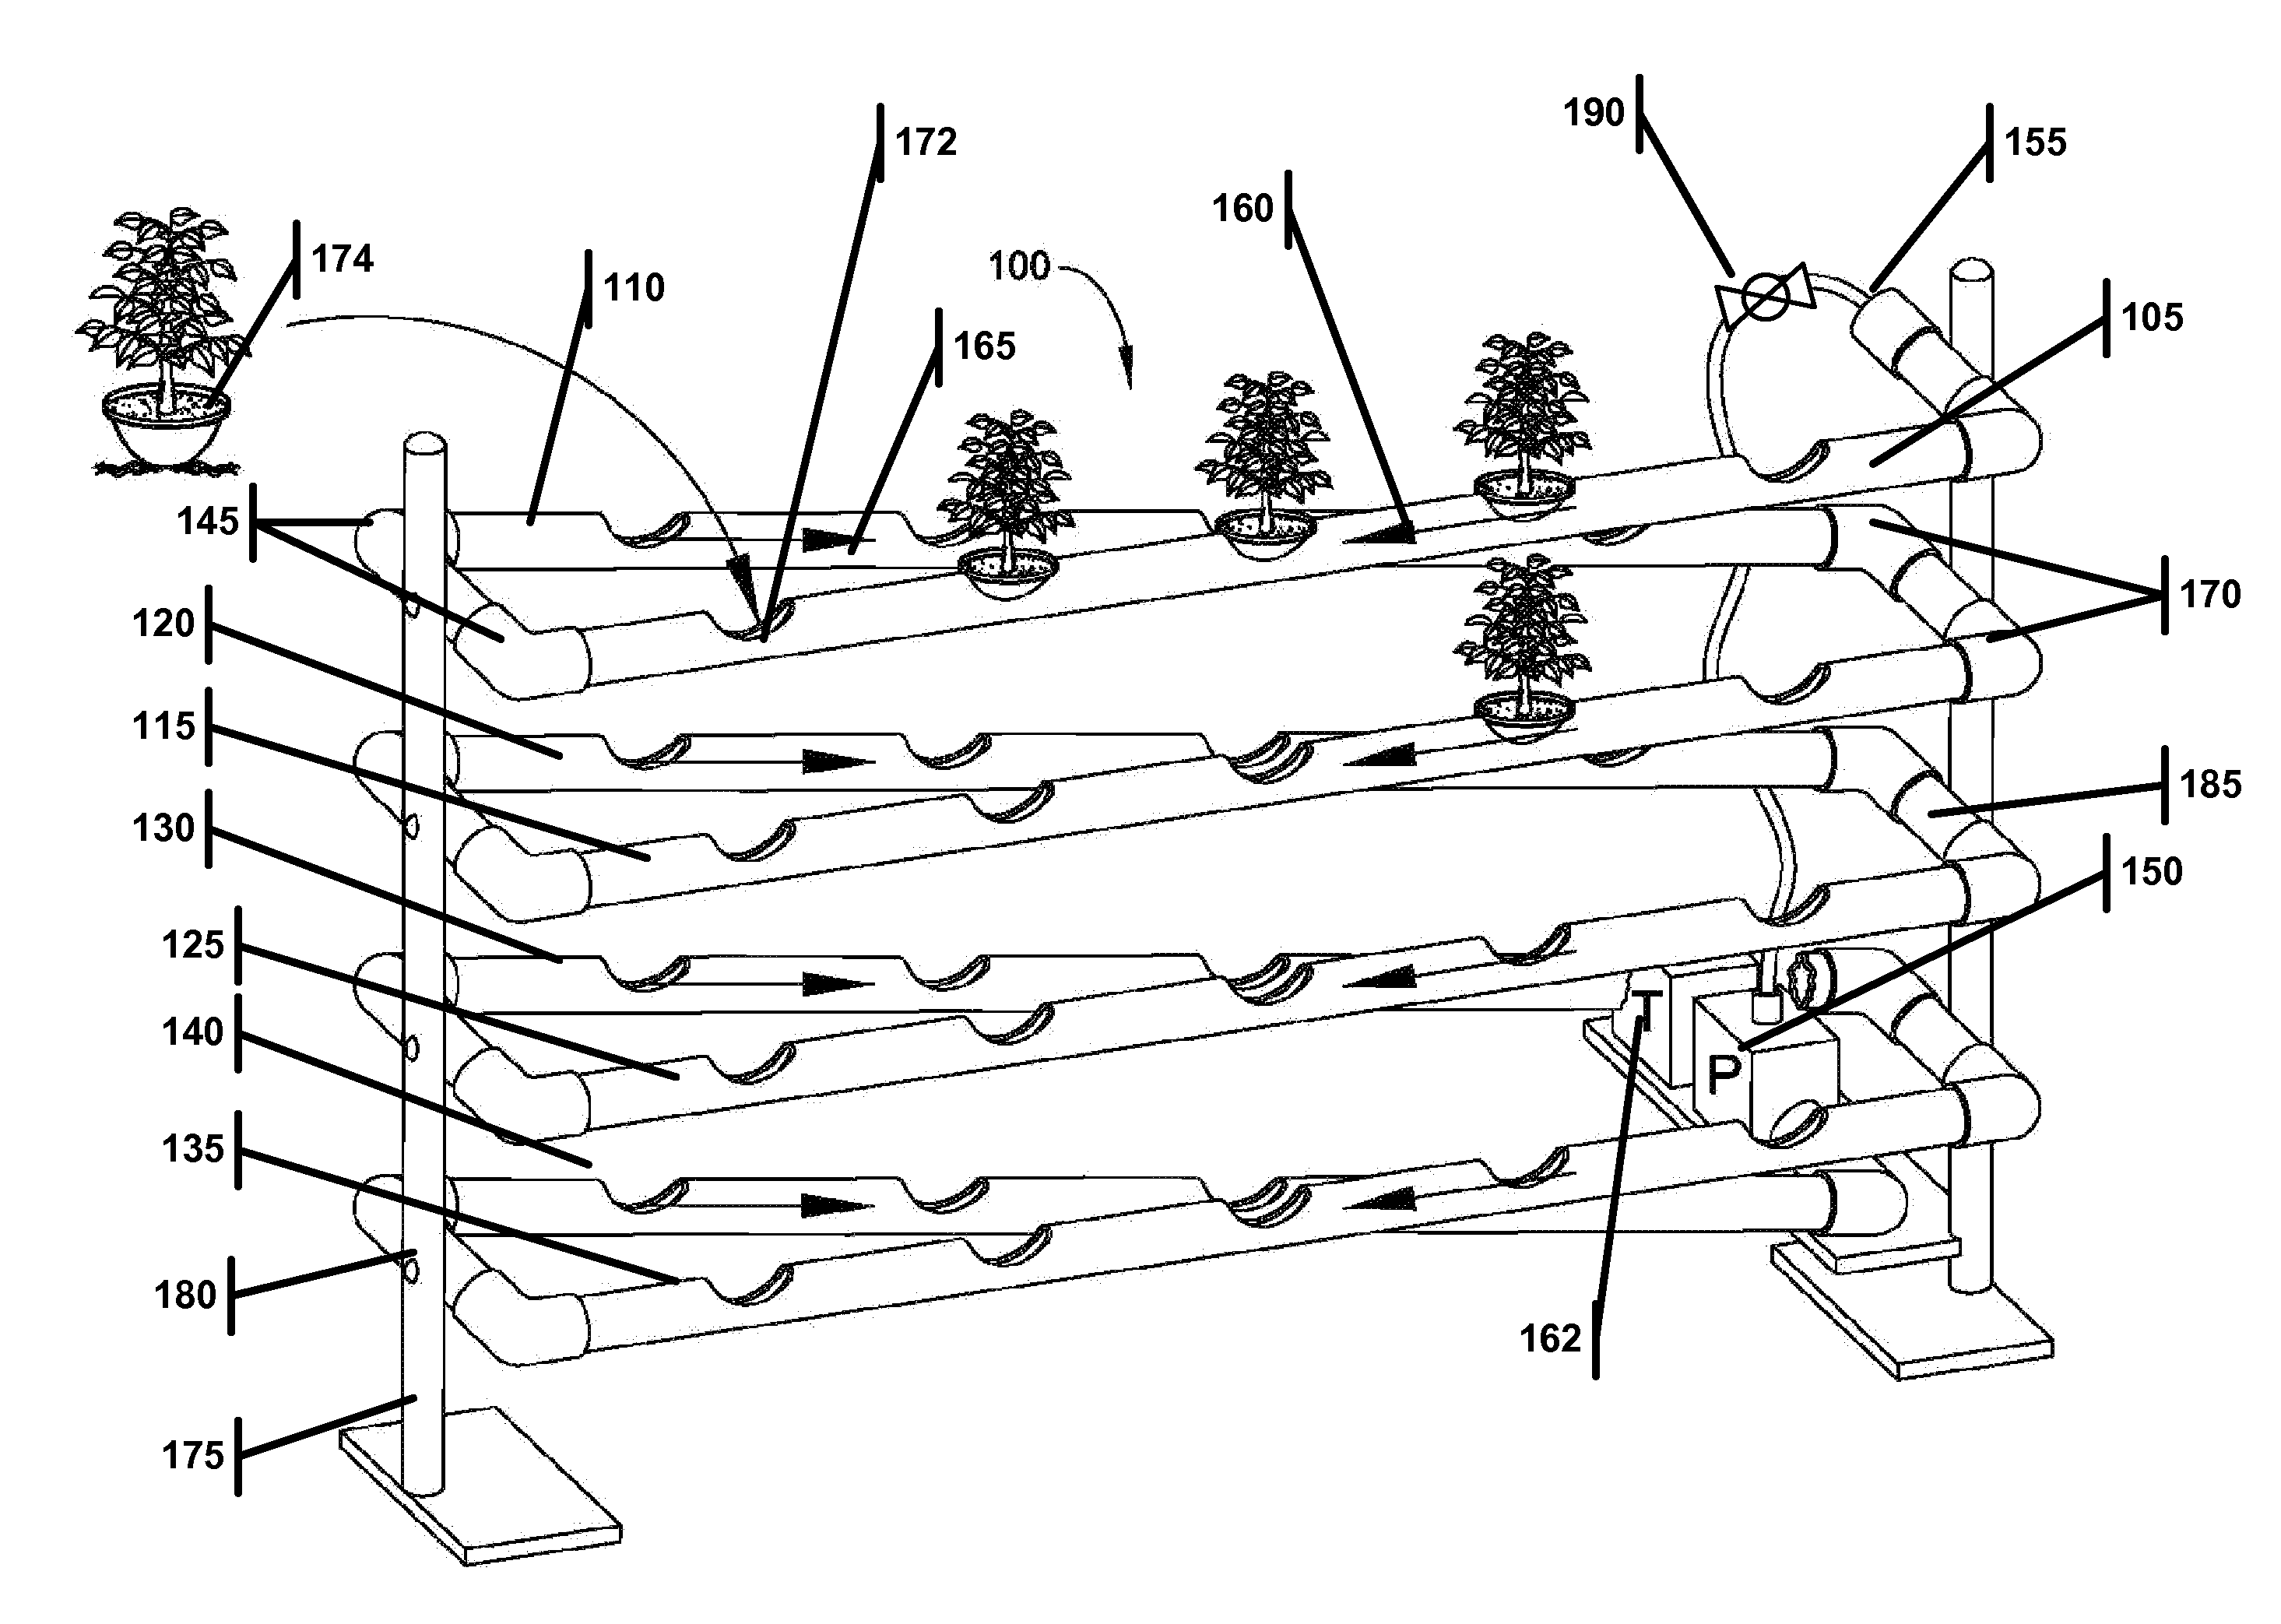 Vertical Hydroponics System